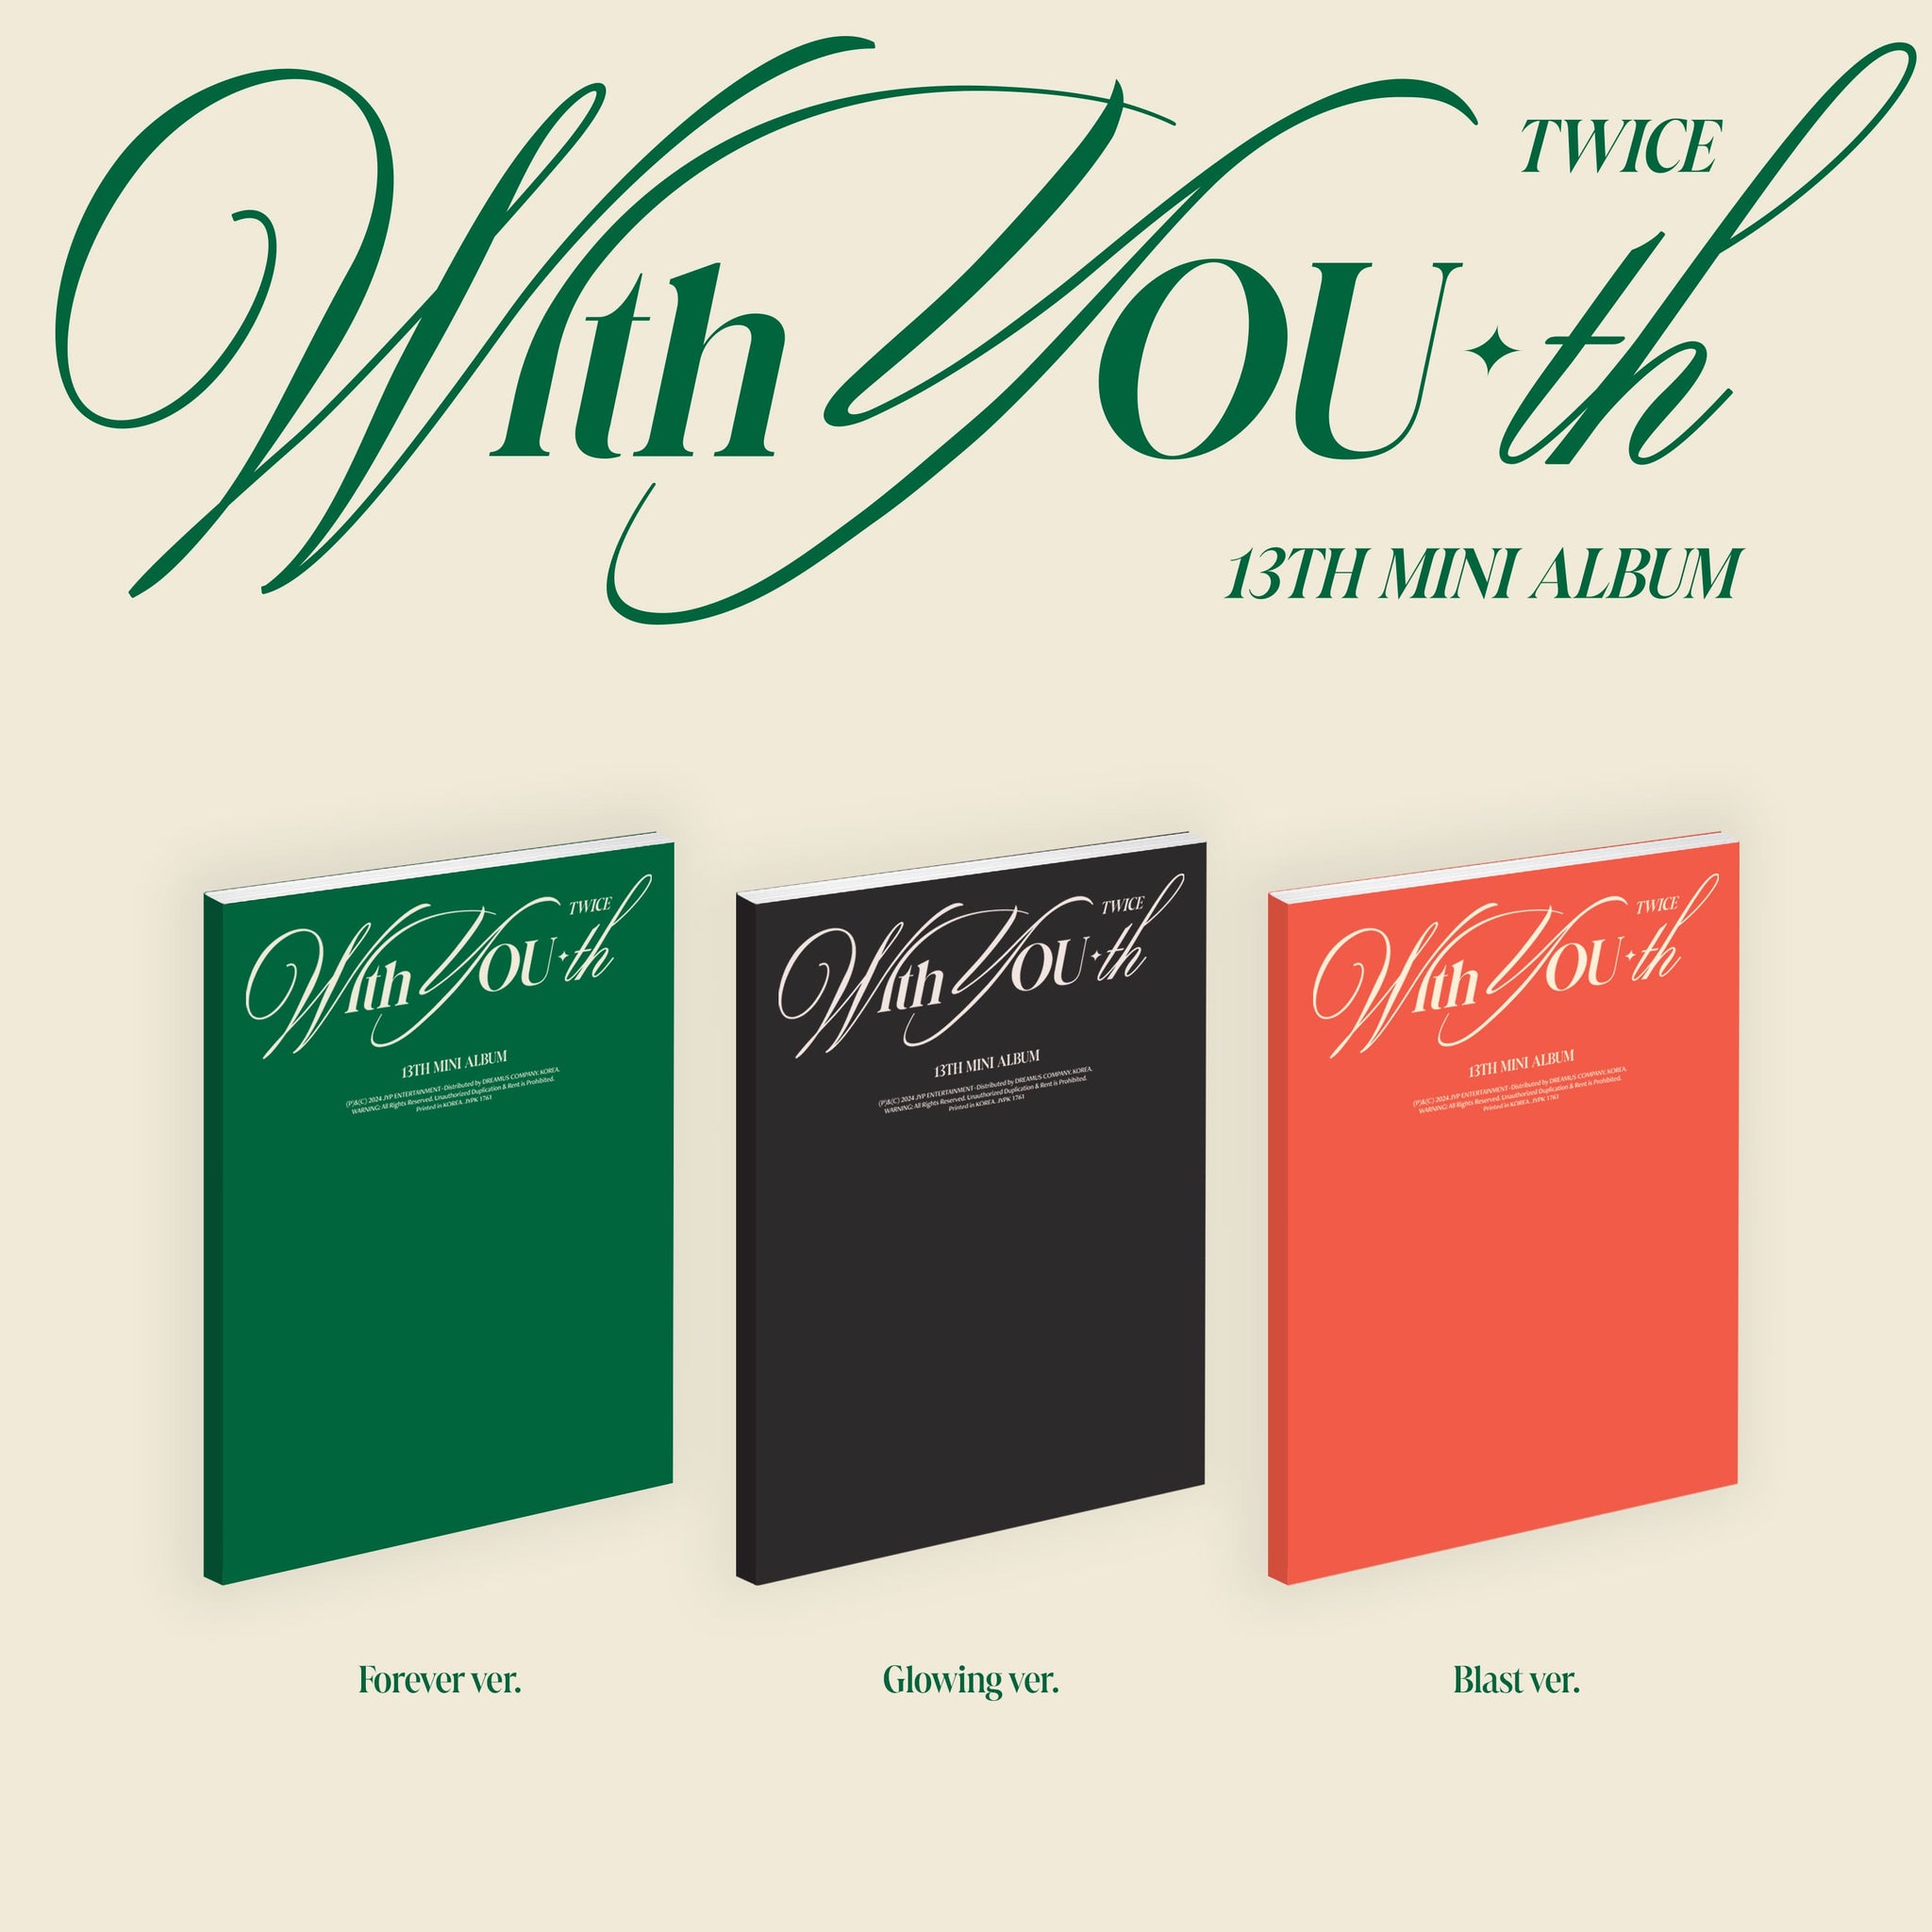 TWICE [With YOU-th] 13th Mini Album